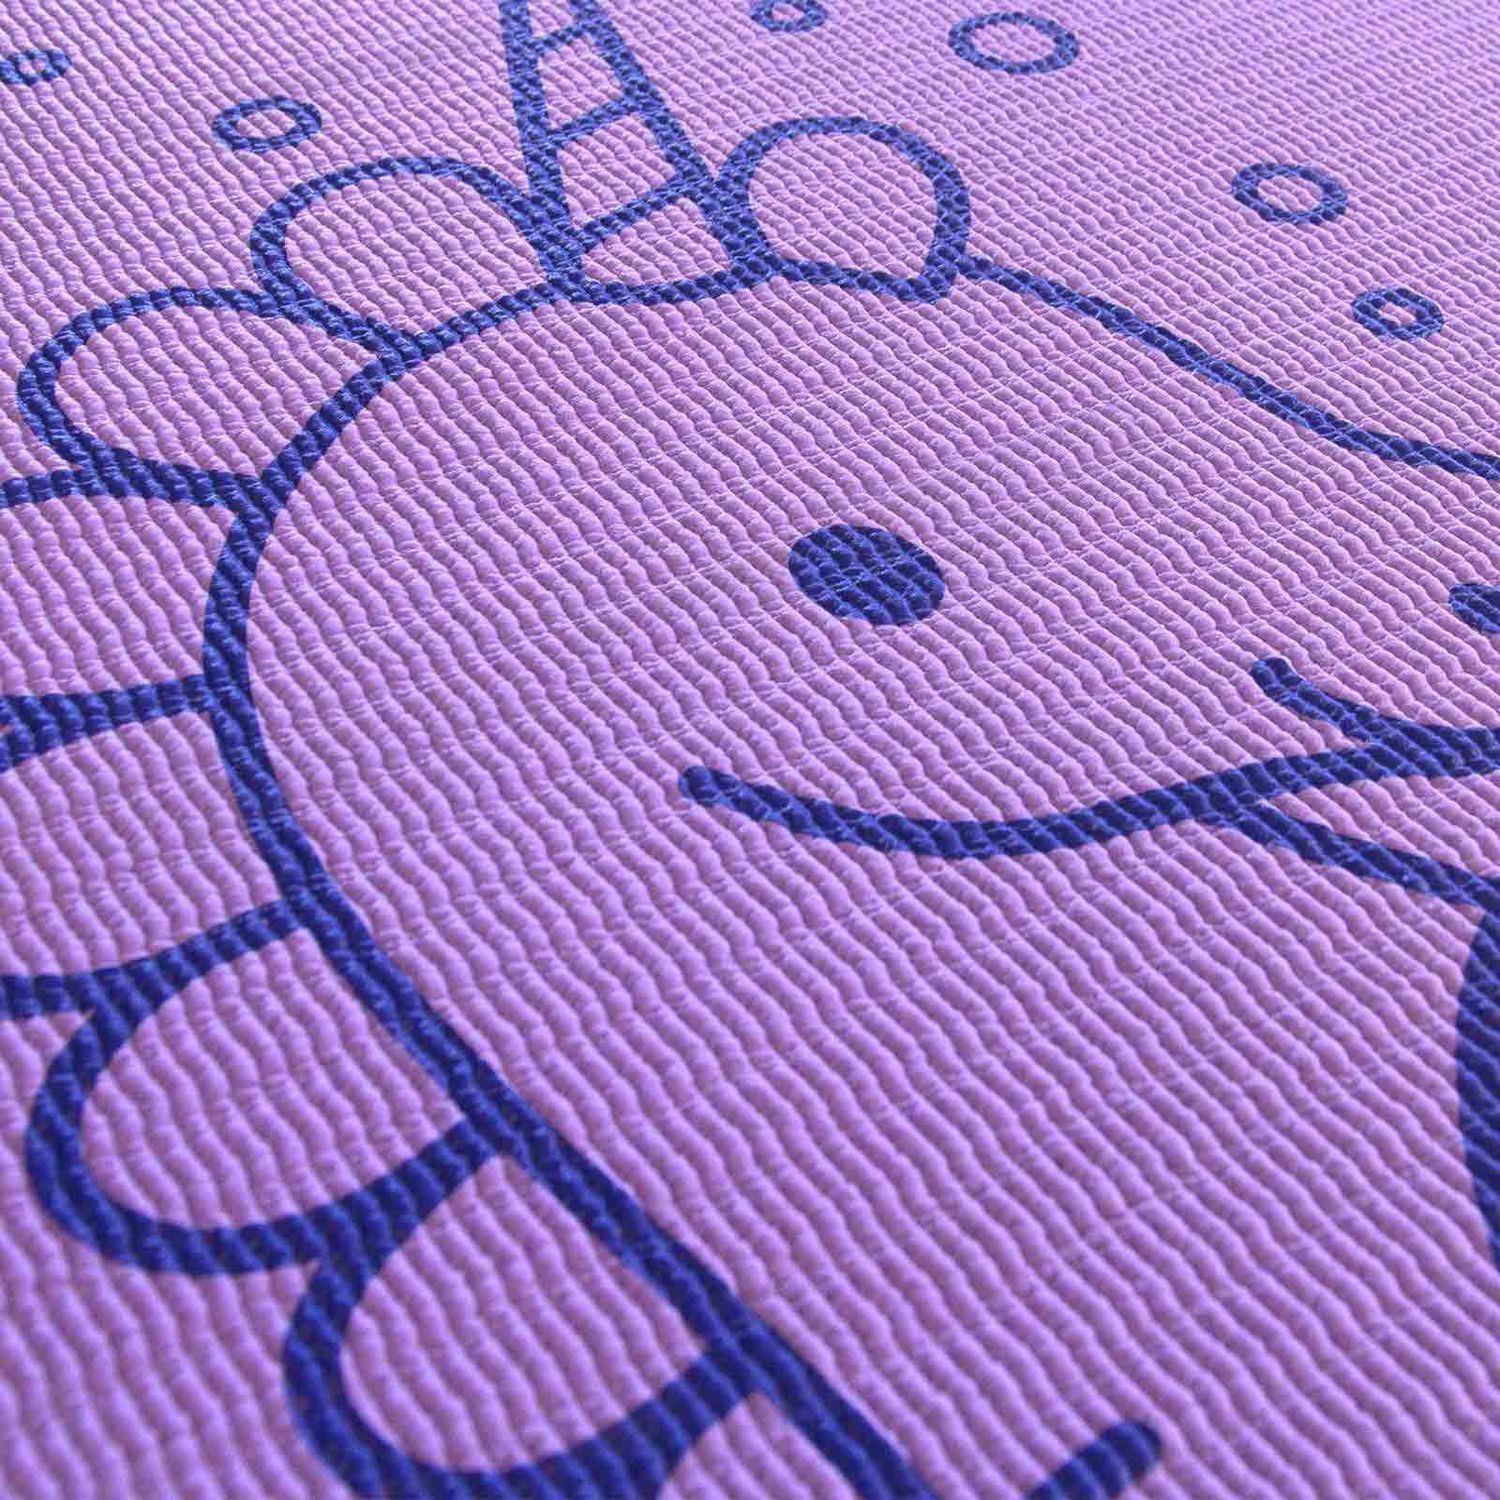 Disney Moana Printed 3mm Yoga Mat – 24” x 60 – Teal/Purple 